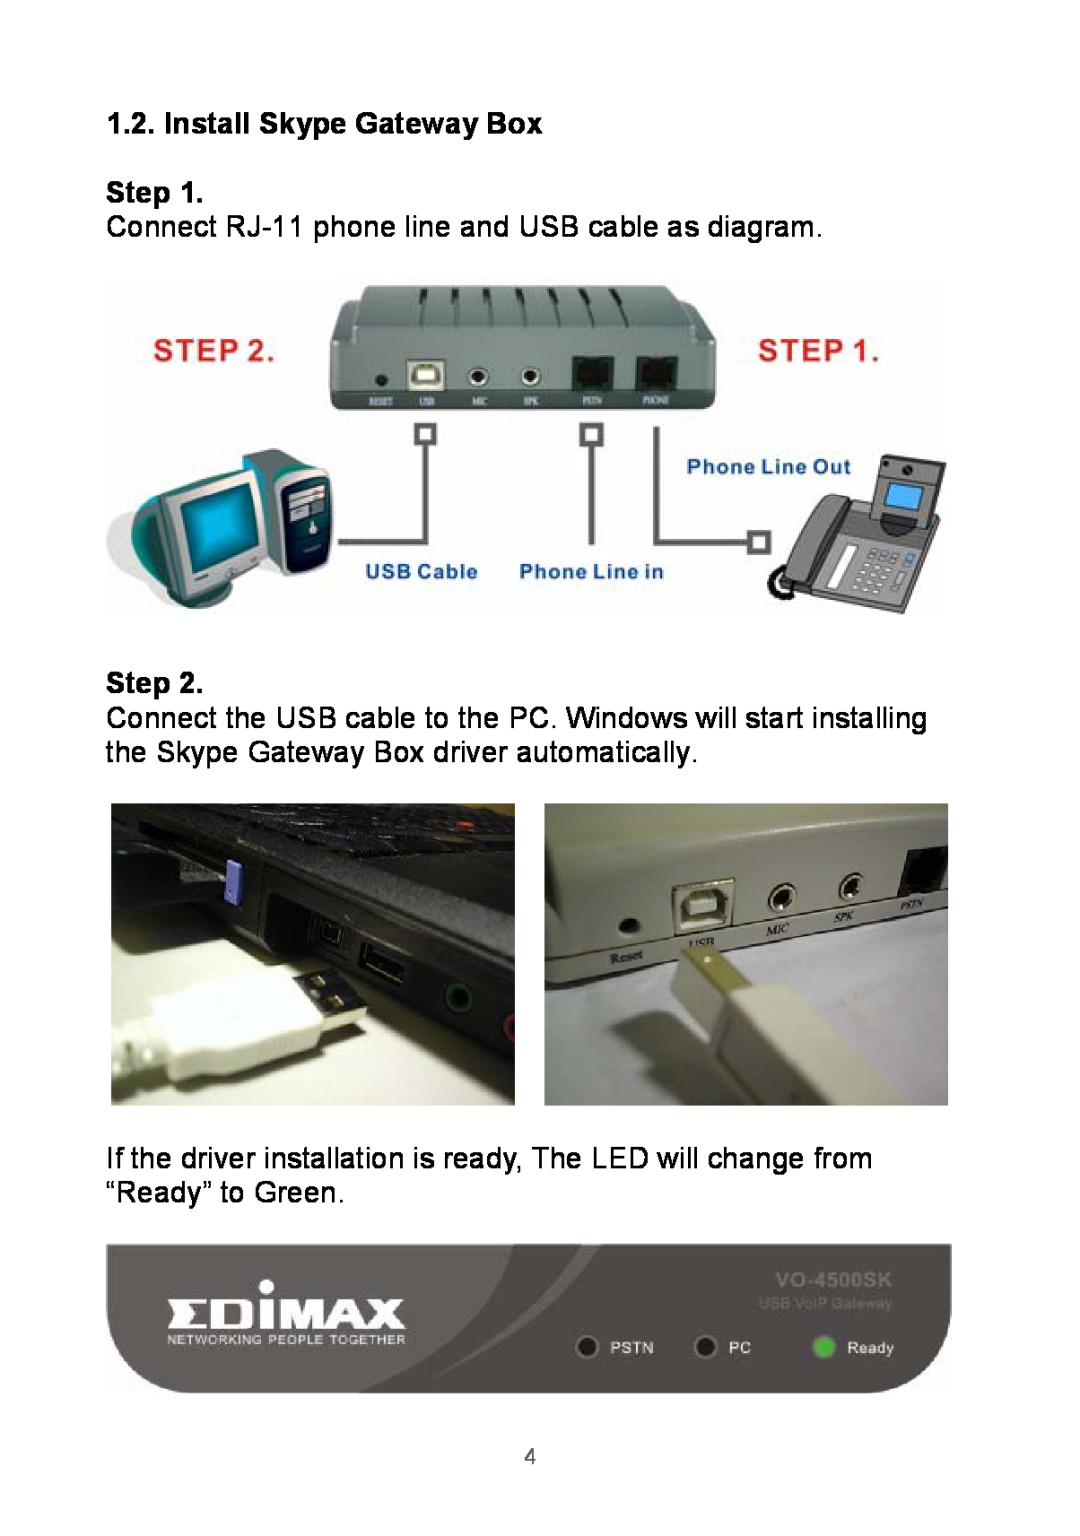 Edimax Technology None manual Install Skype Gateway Box Step 